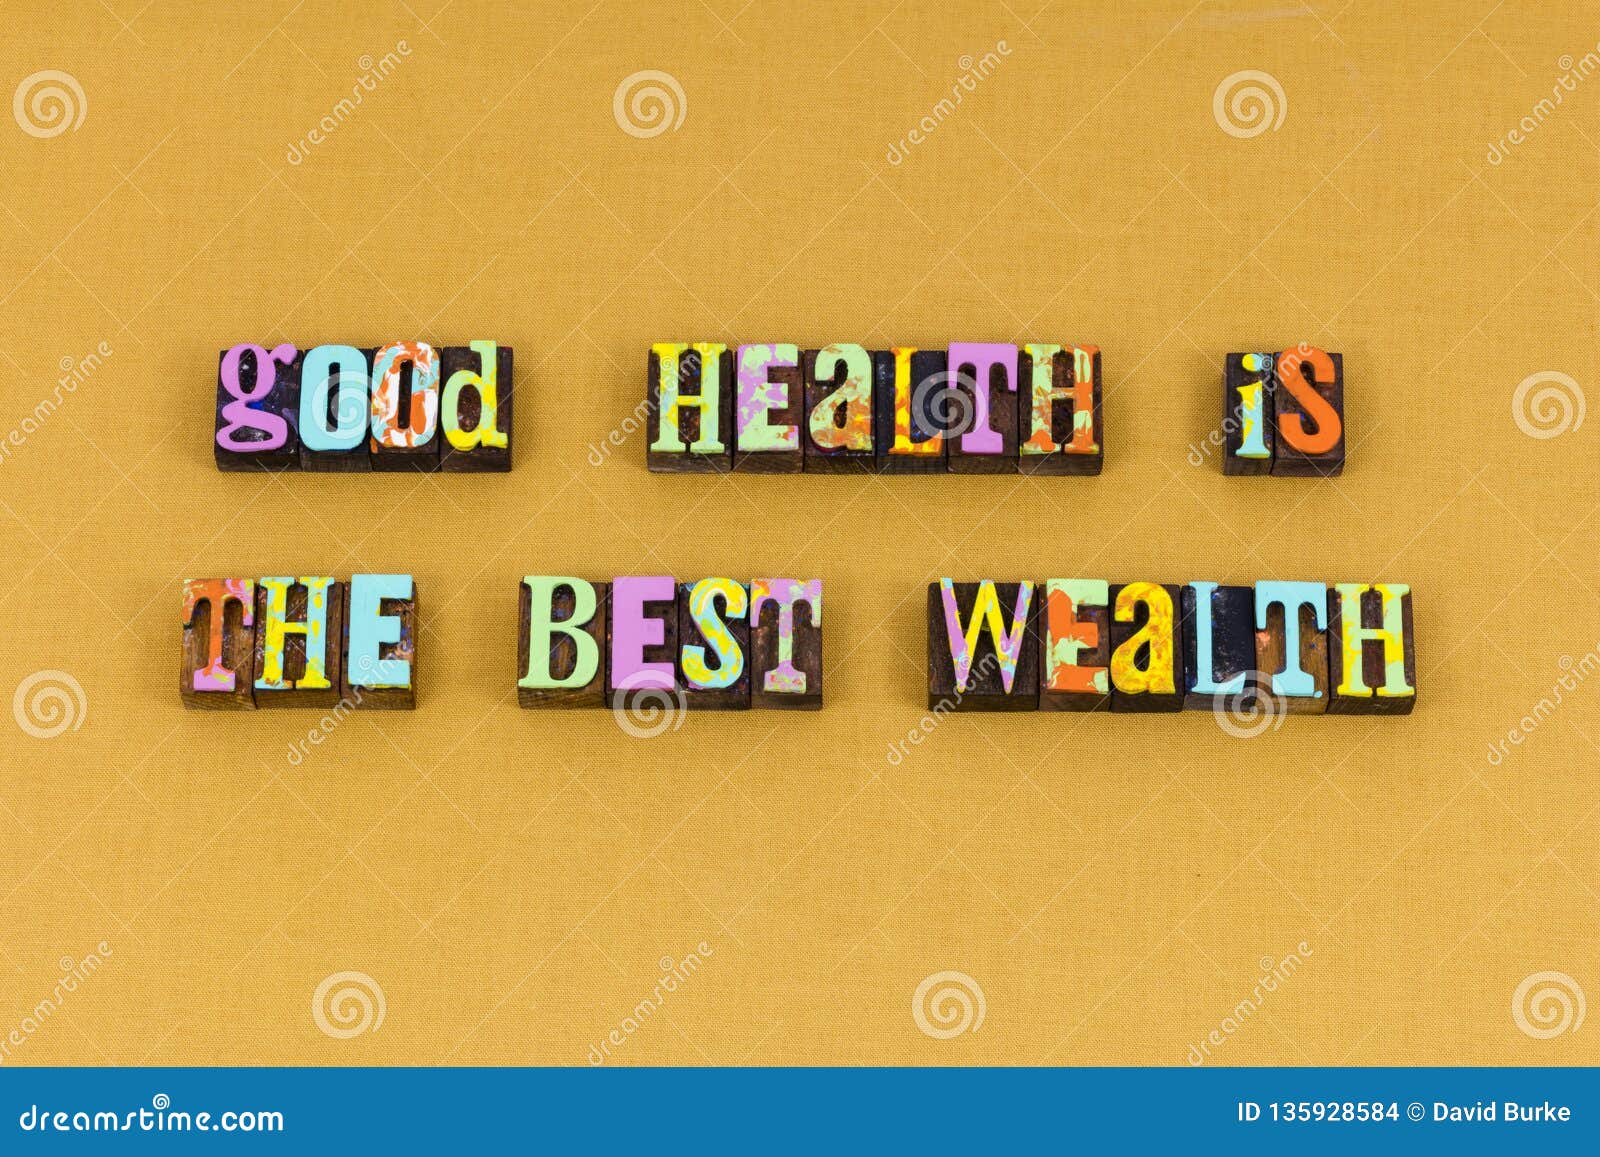 good health best wealth life healthy wellness personal healthcare